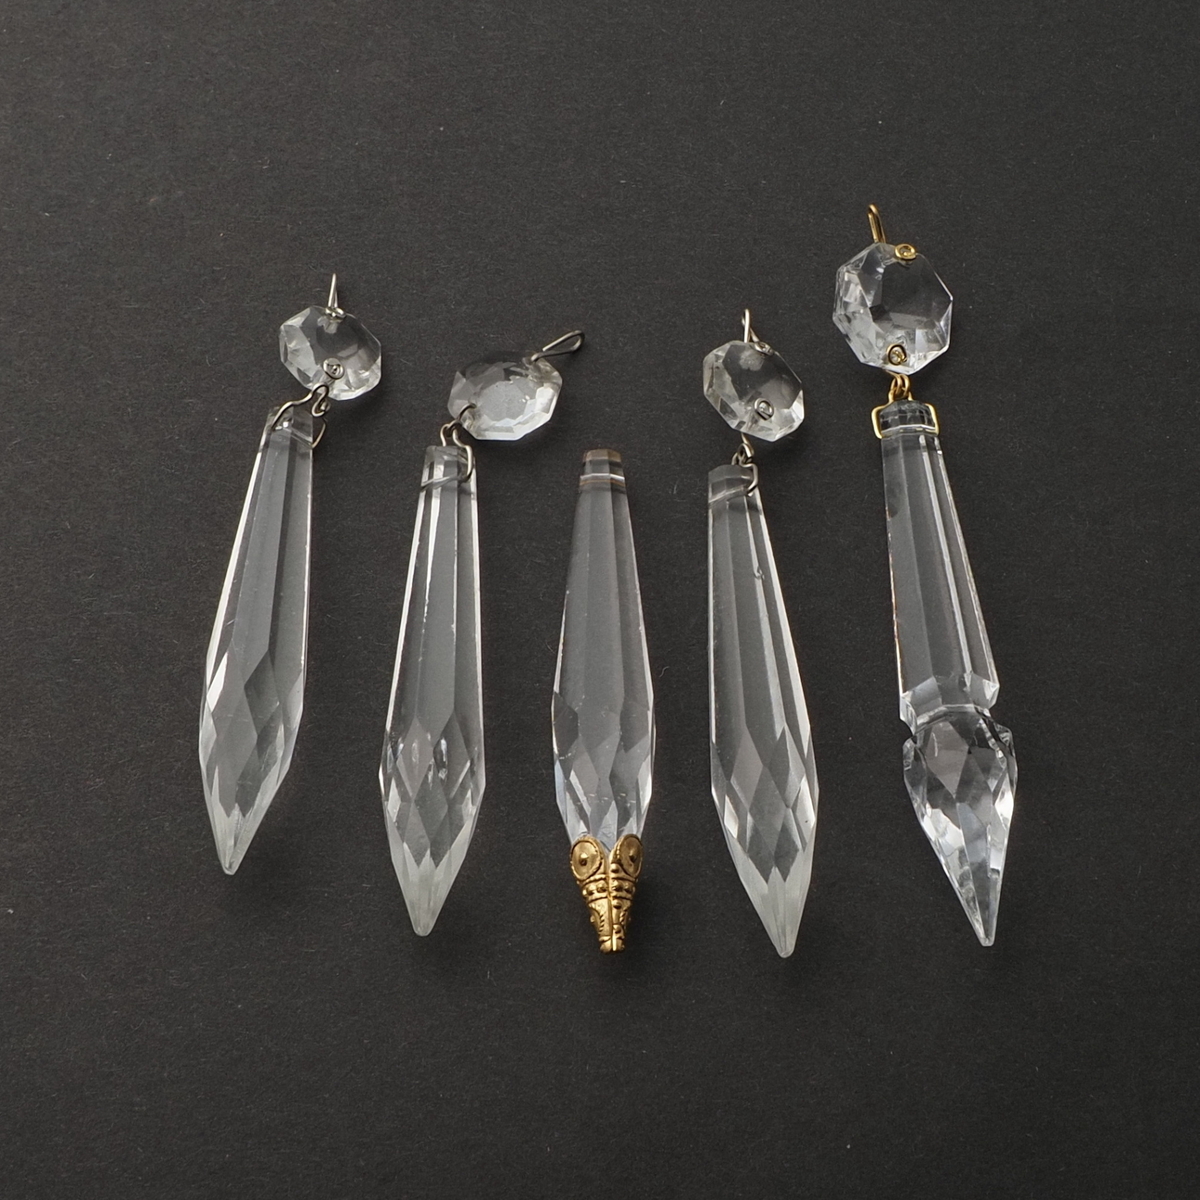 Lot (5) Vintage Czech crystal glass icicle spear chandelier prisms 